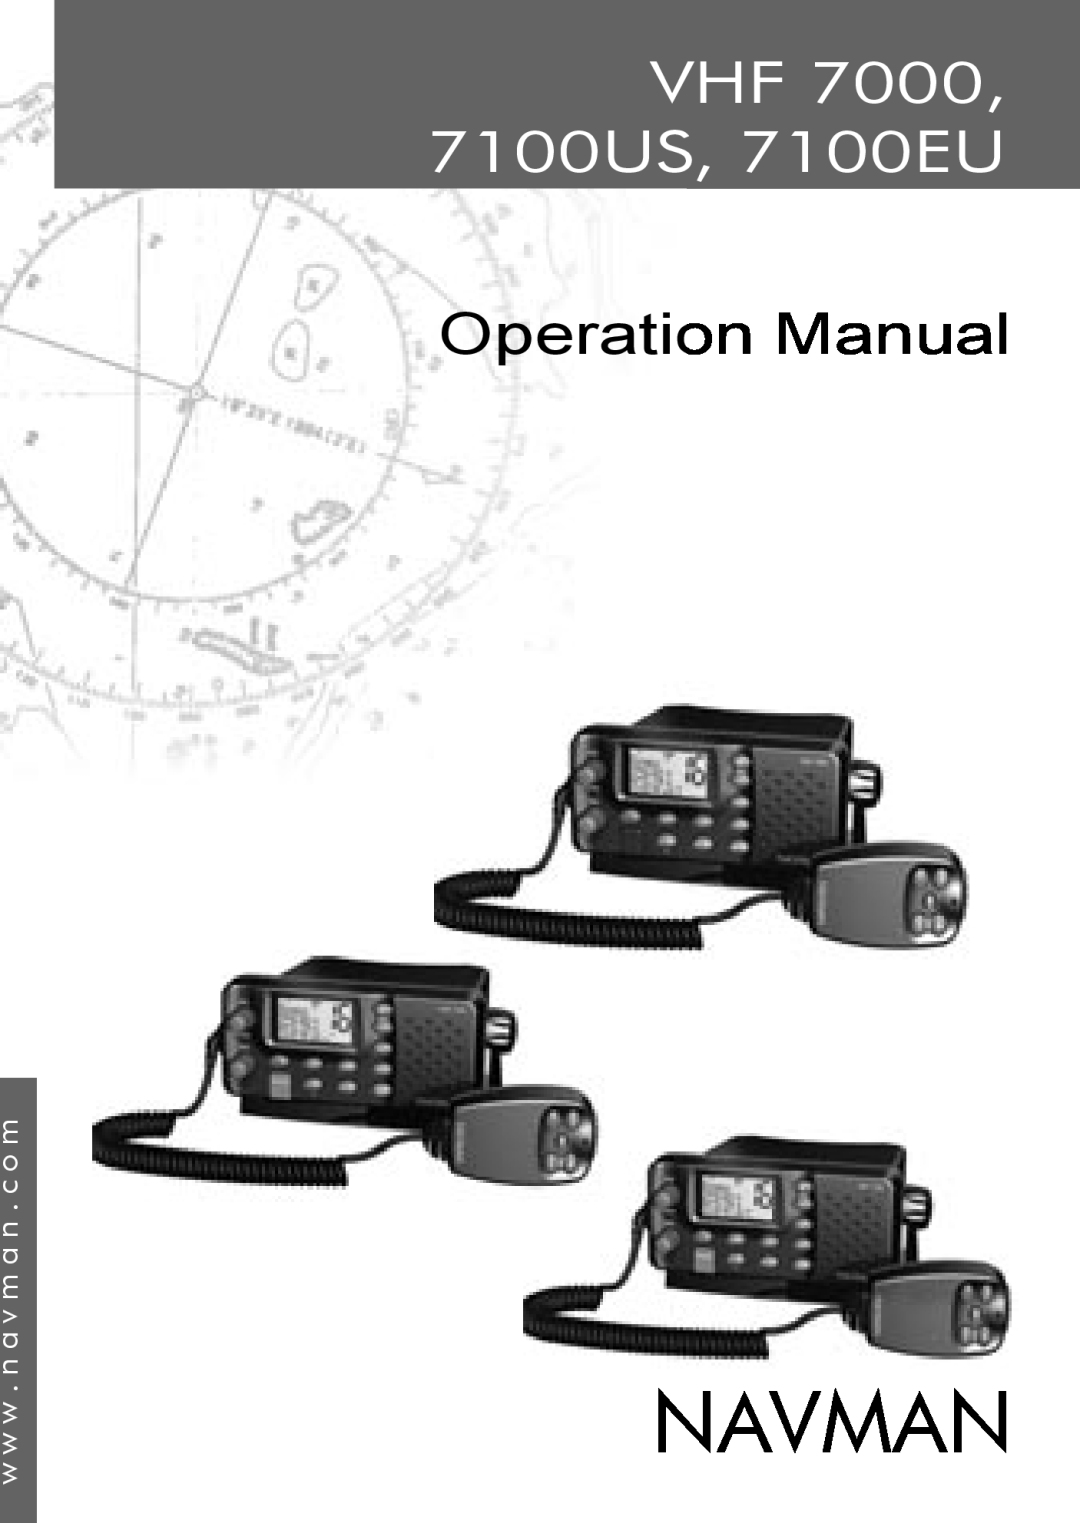 Navman operation manual Navman, VHF 7000, 7100US, 7100EU, Operation Manual, w w w . n a v m a n . c o m 